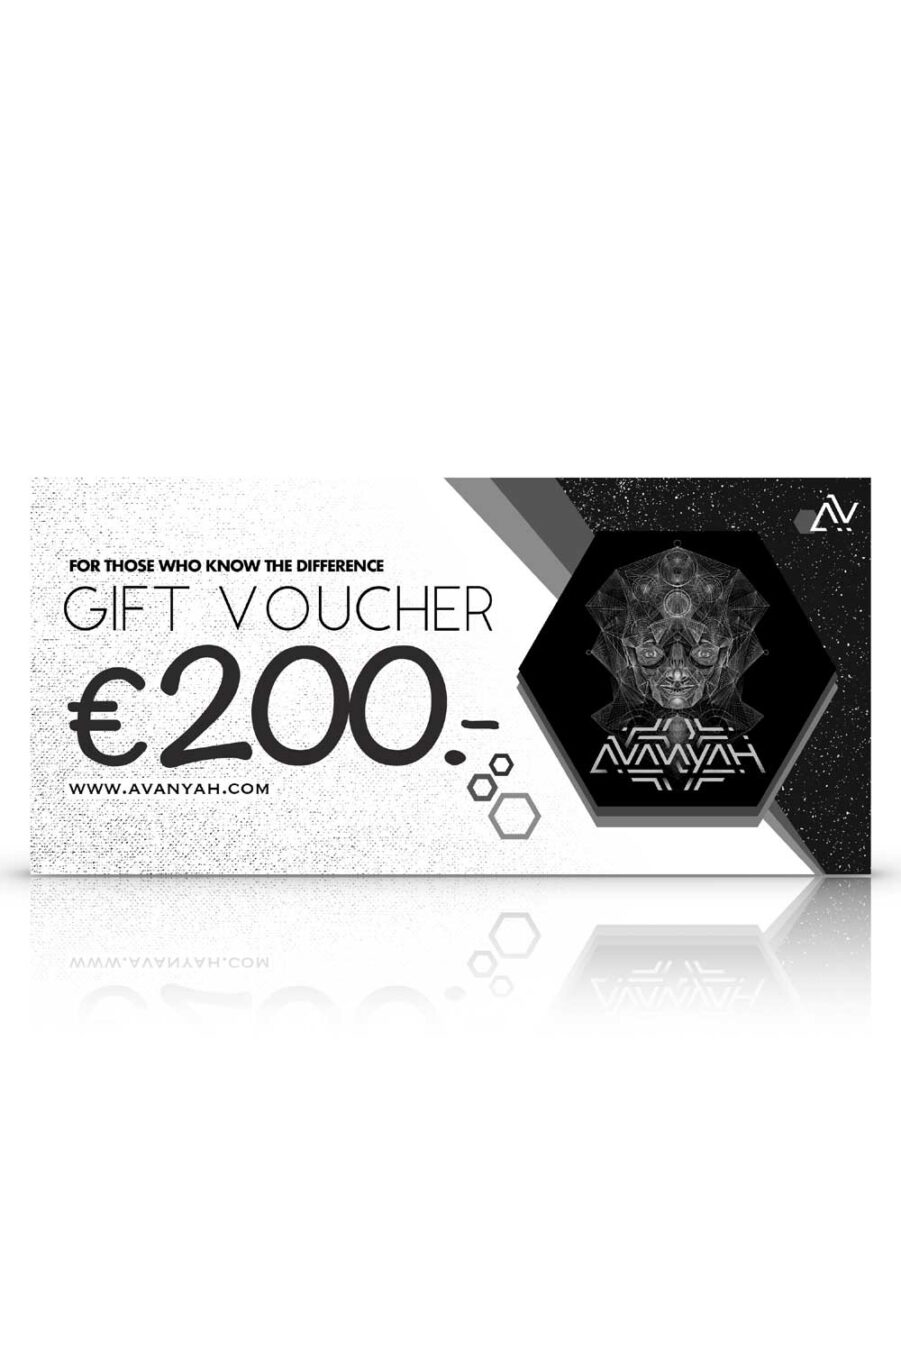 200 € Gift card in Avanyah's online fashion store